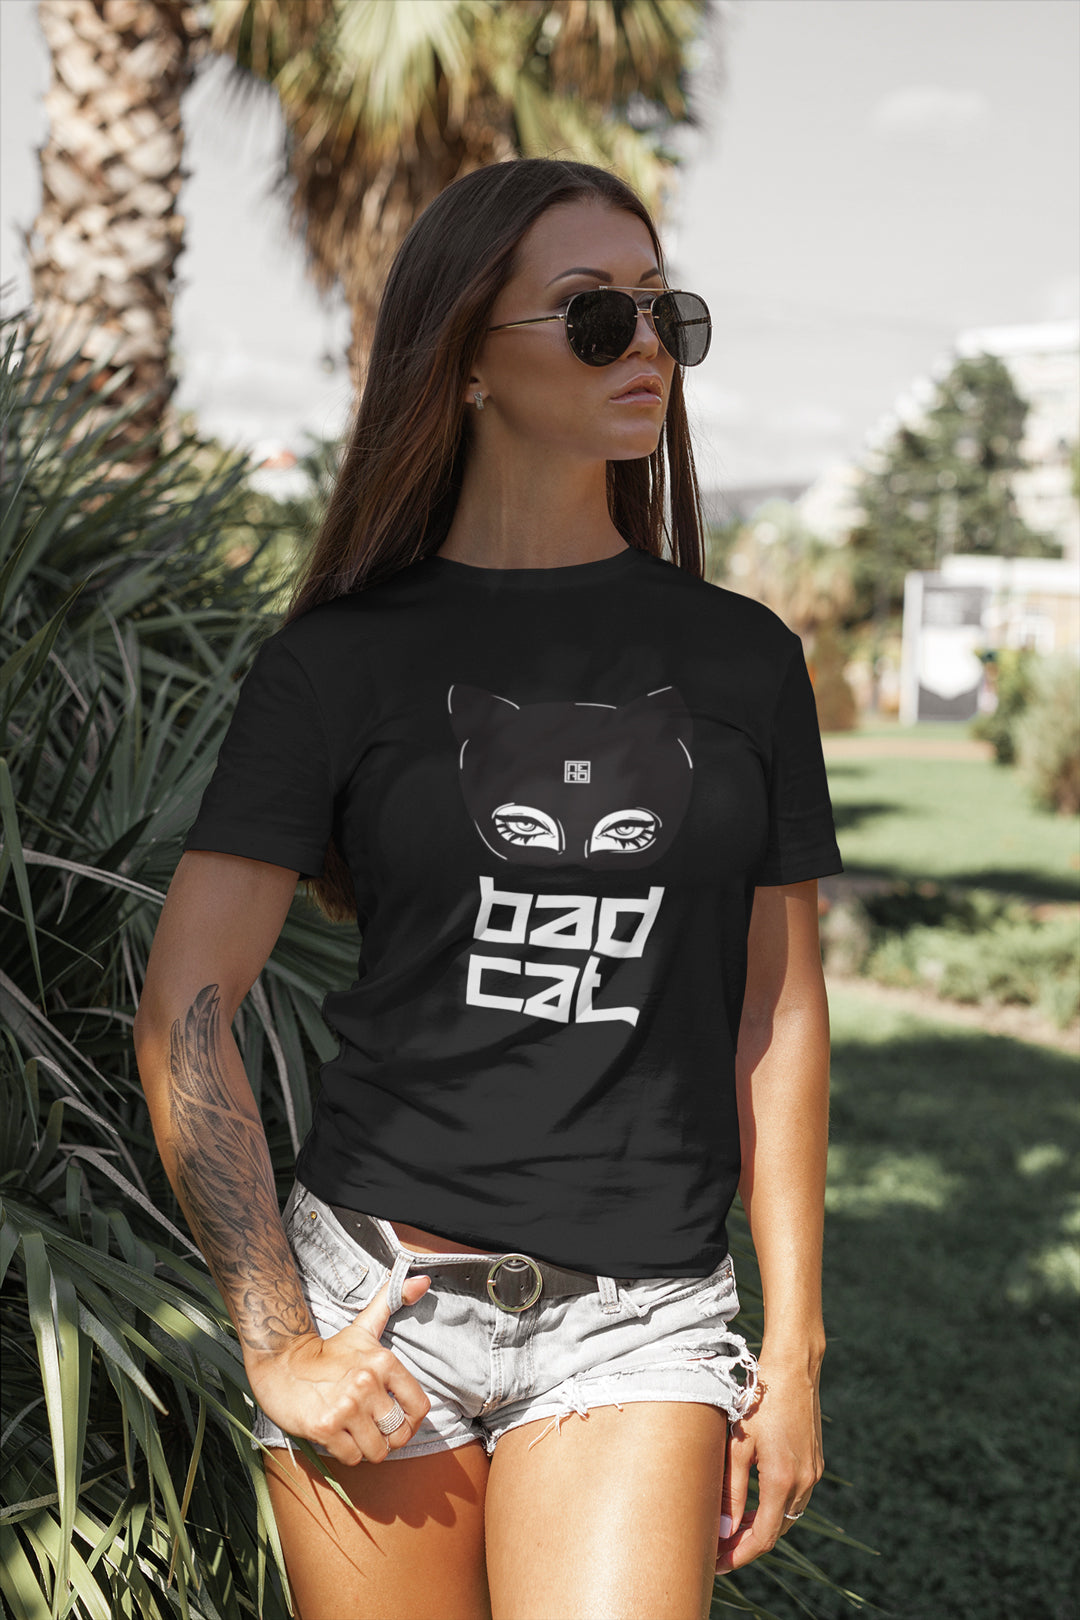 Bad Cat  - Women's Relaxed Black T-Shirt